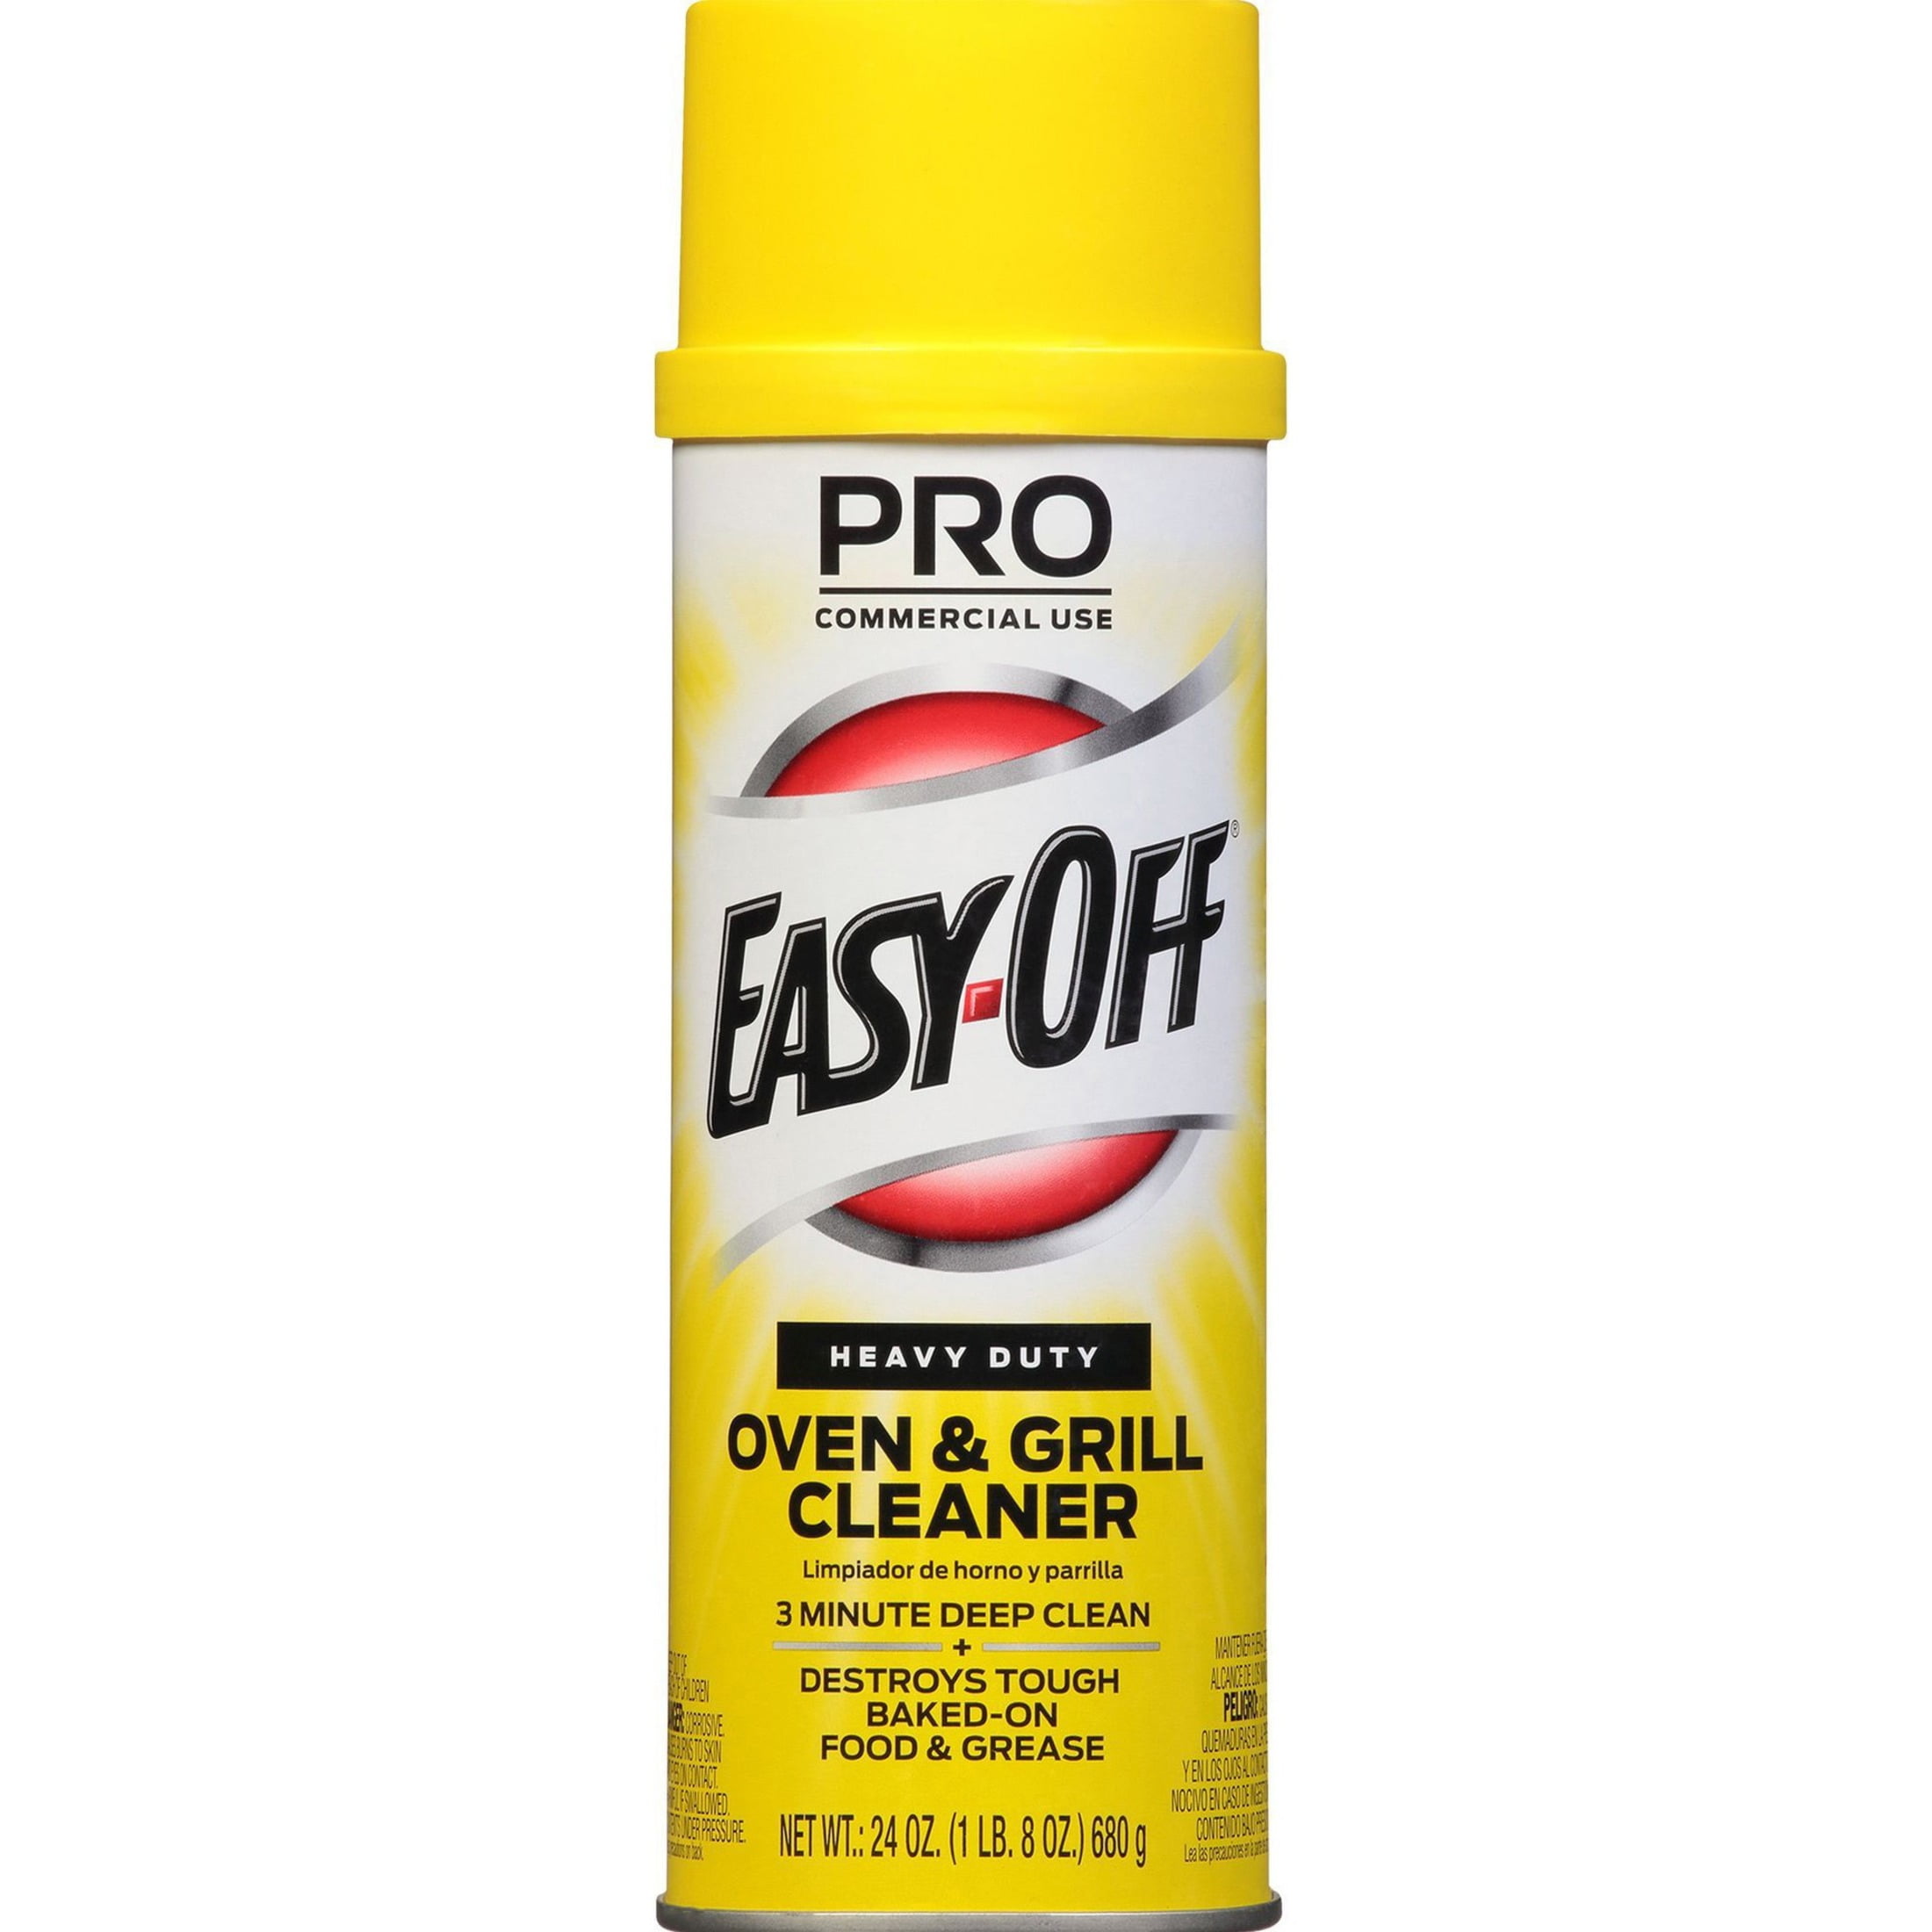 Easy Off Heavy Duty Degreaser Cleaner Spray, 32 Ounce